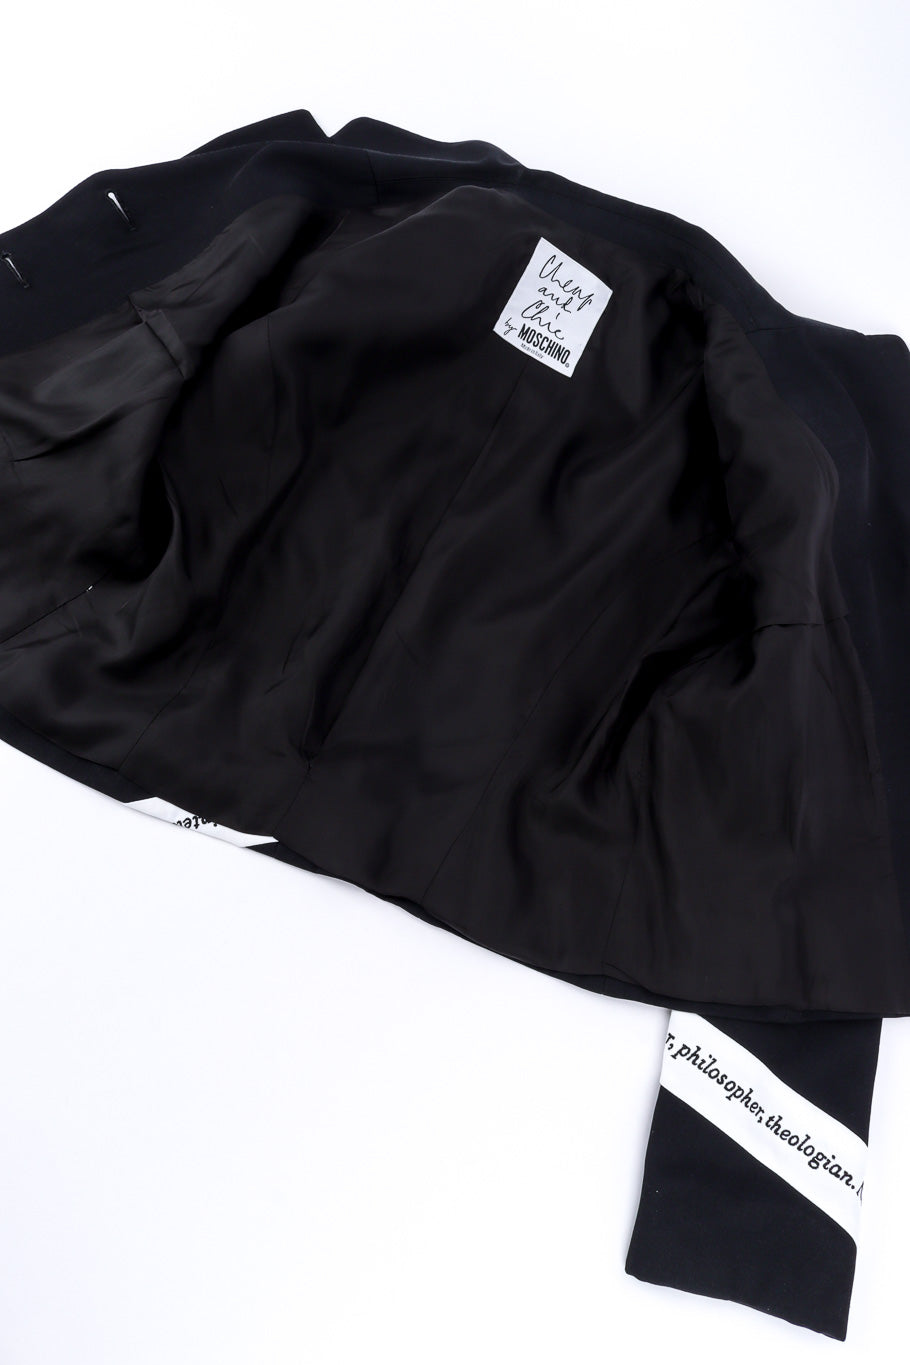 Irony of Design Text Blazer & Skirt Suit by Moschino jacket open  @recessla